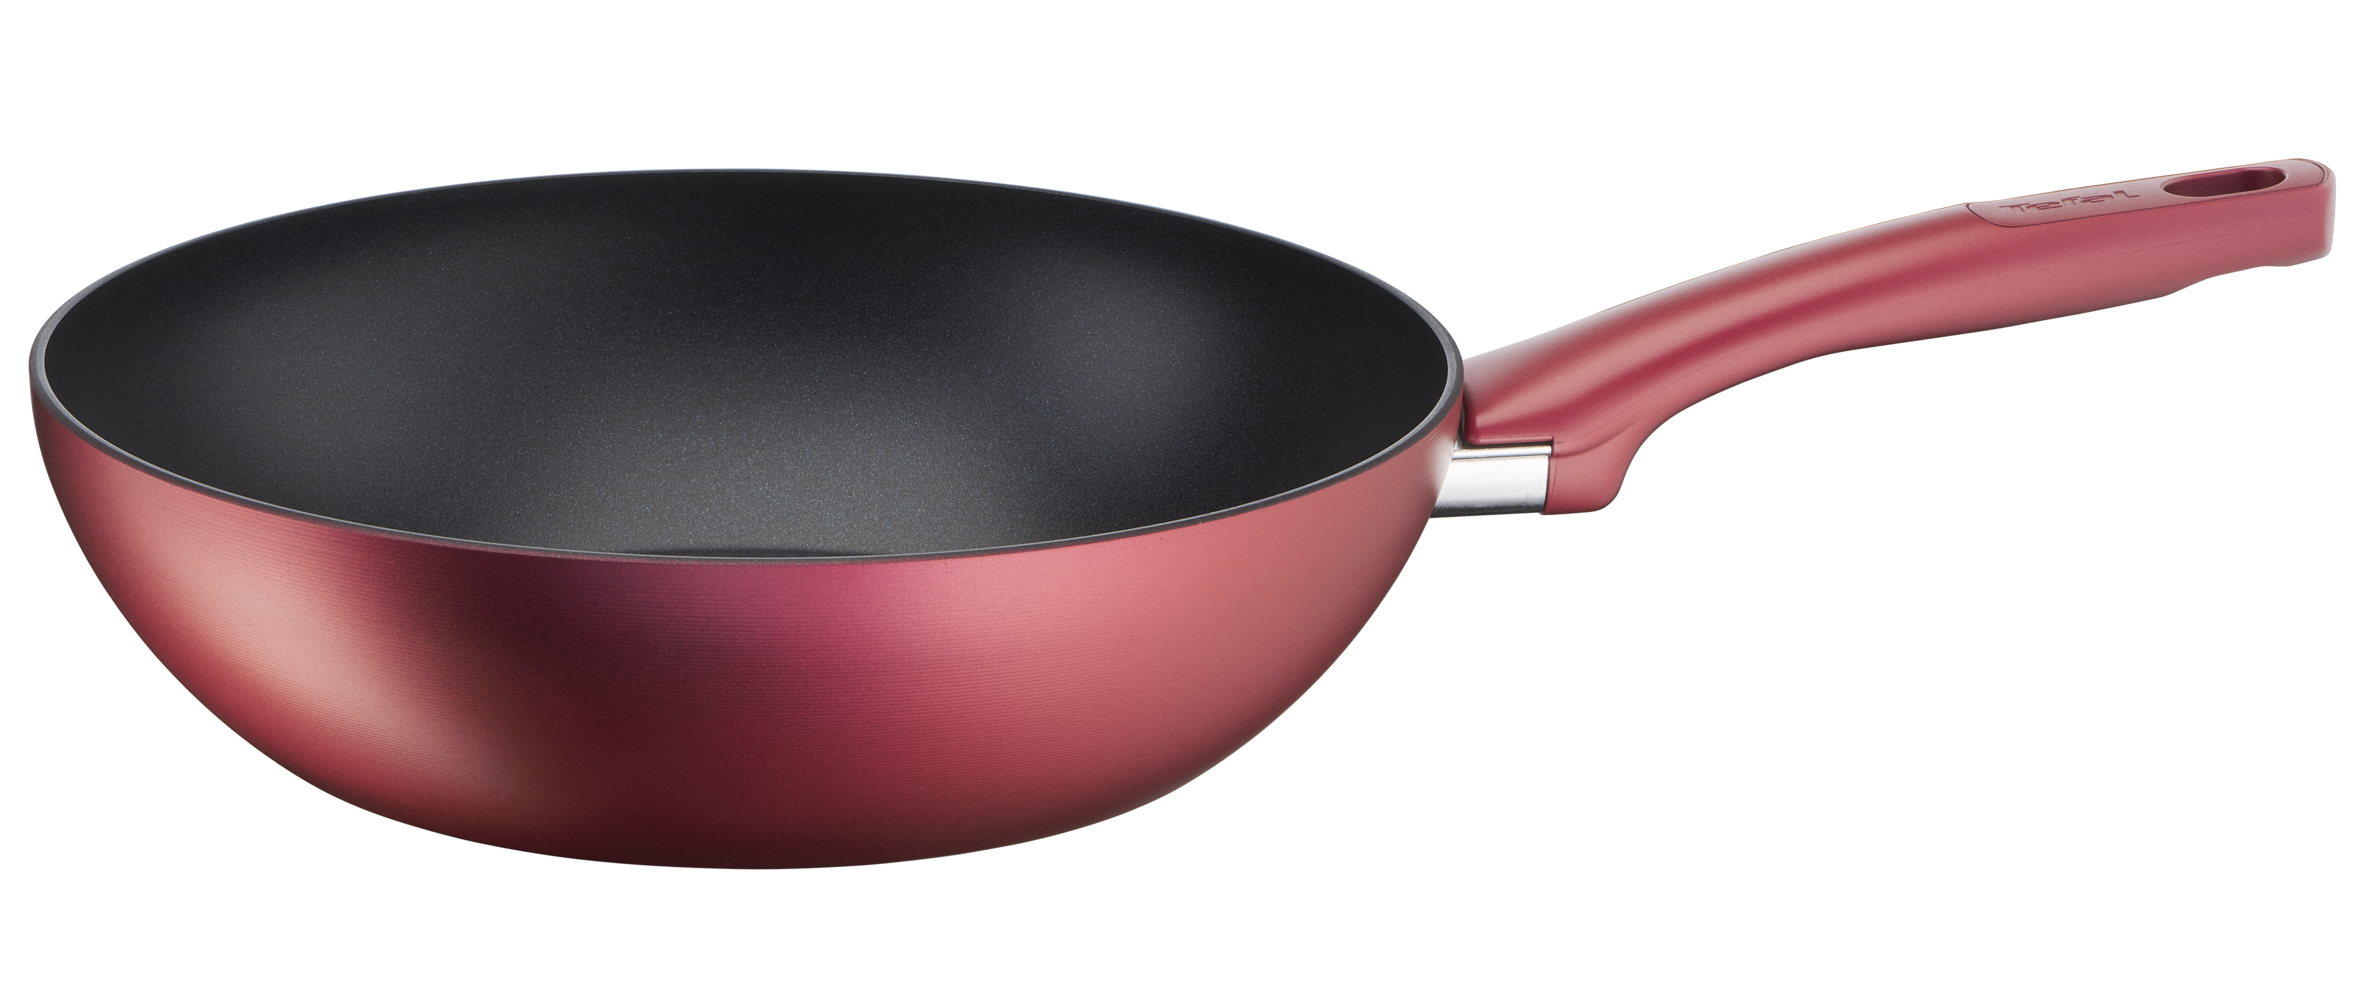 Frying Pan wok Tefal Granit 4192628 28 Tableware Cooking Induction